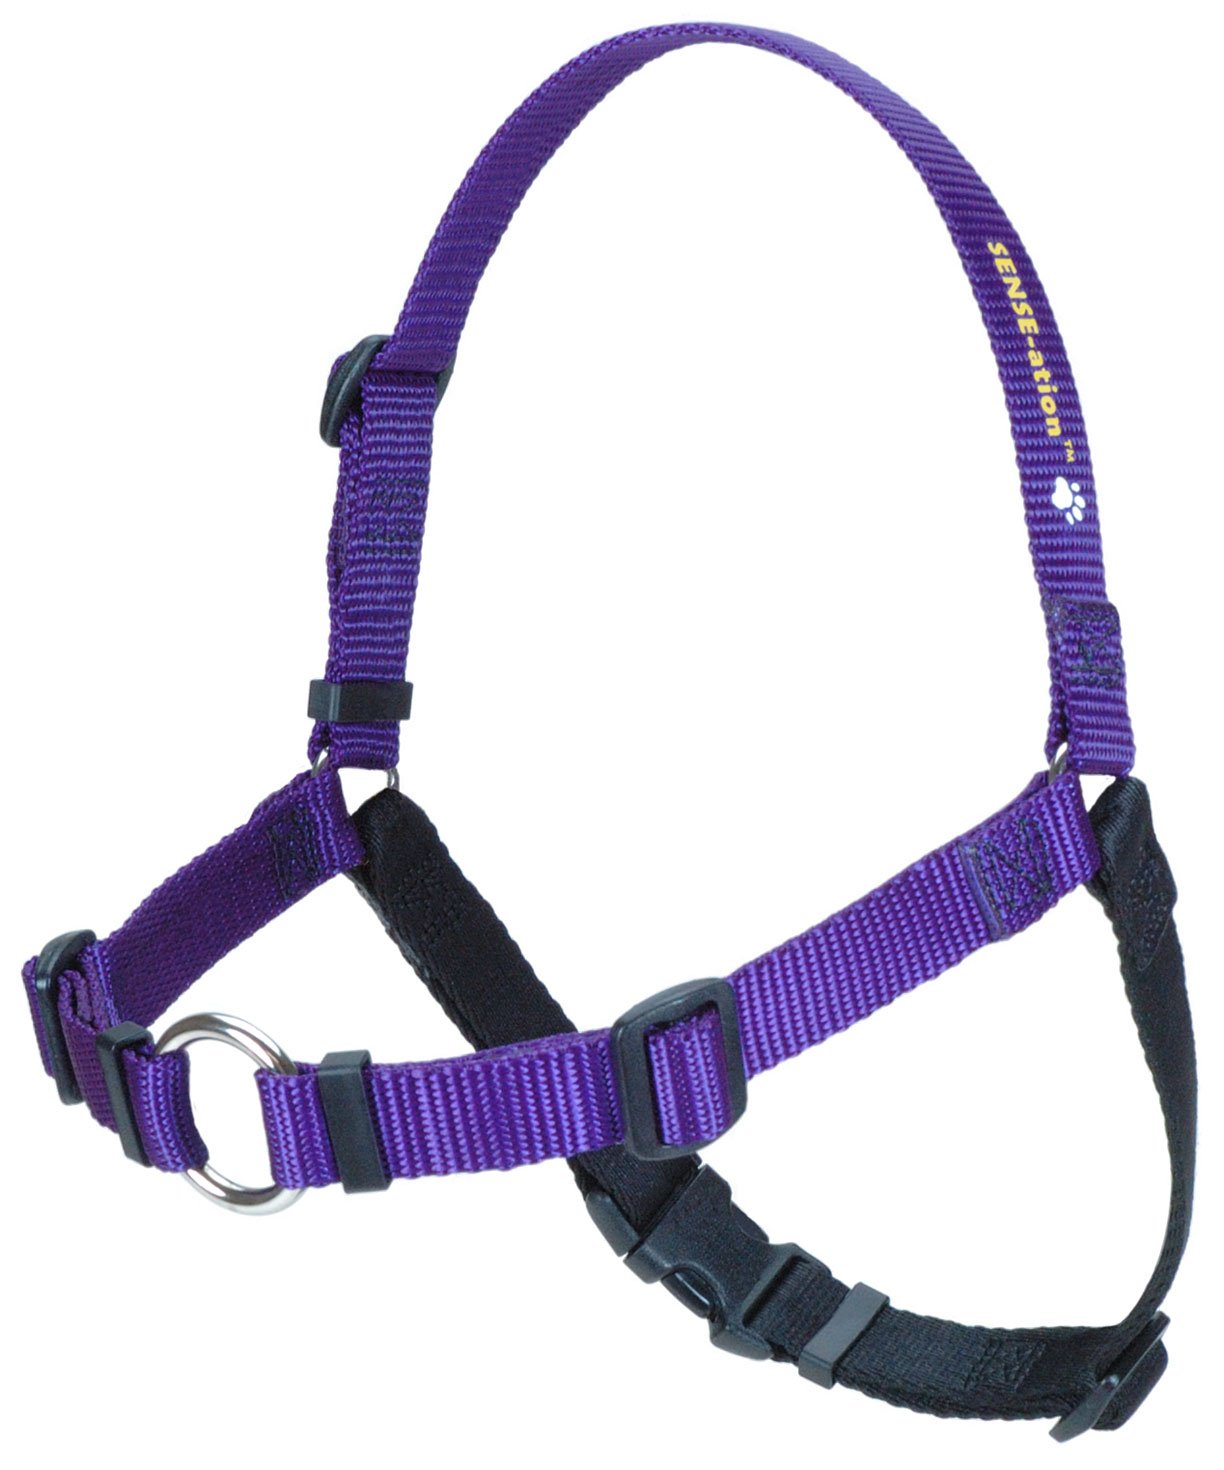 Softouch Concepts SENSE-ation No-Pull Dog Harness - Purple Medium